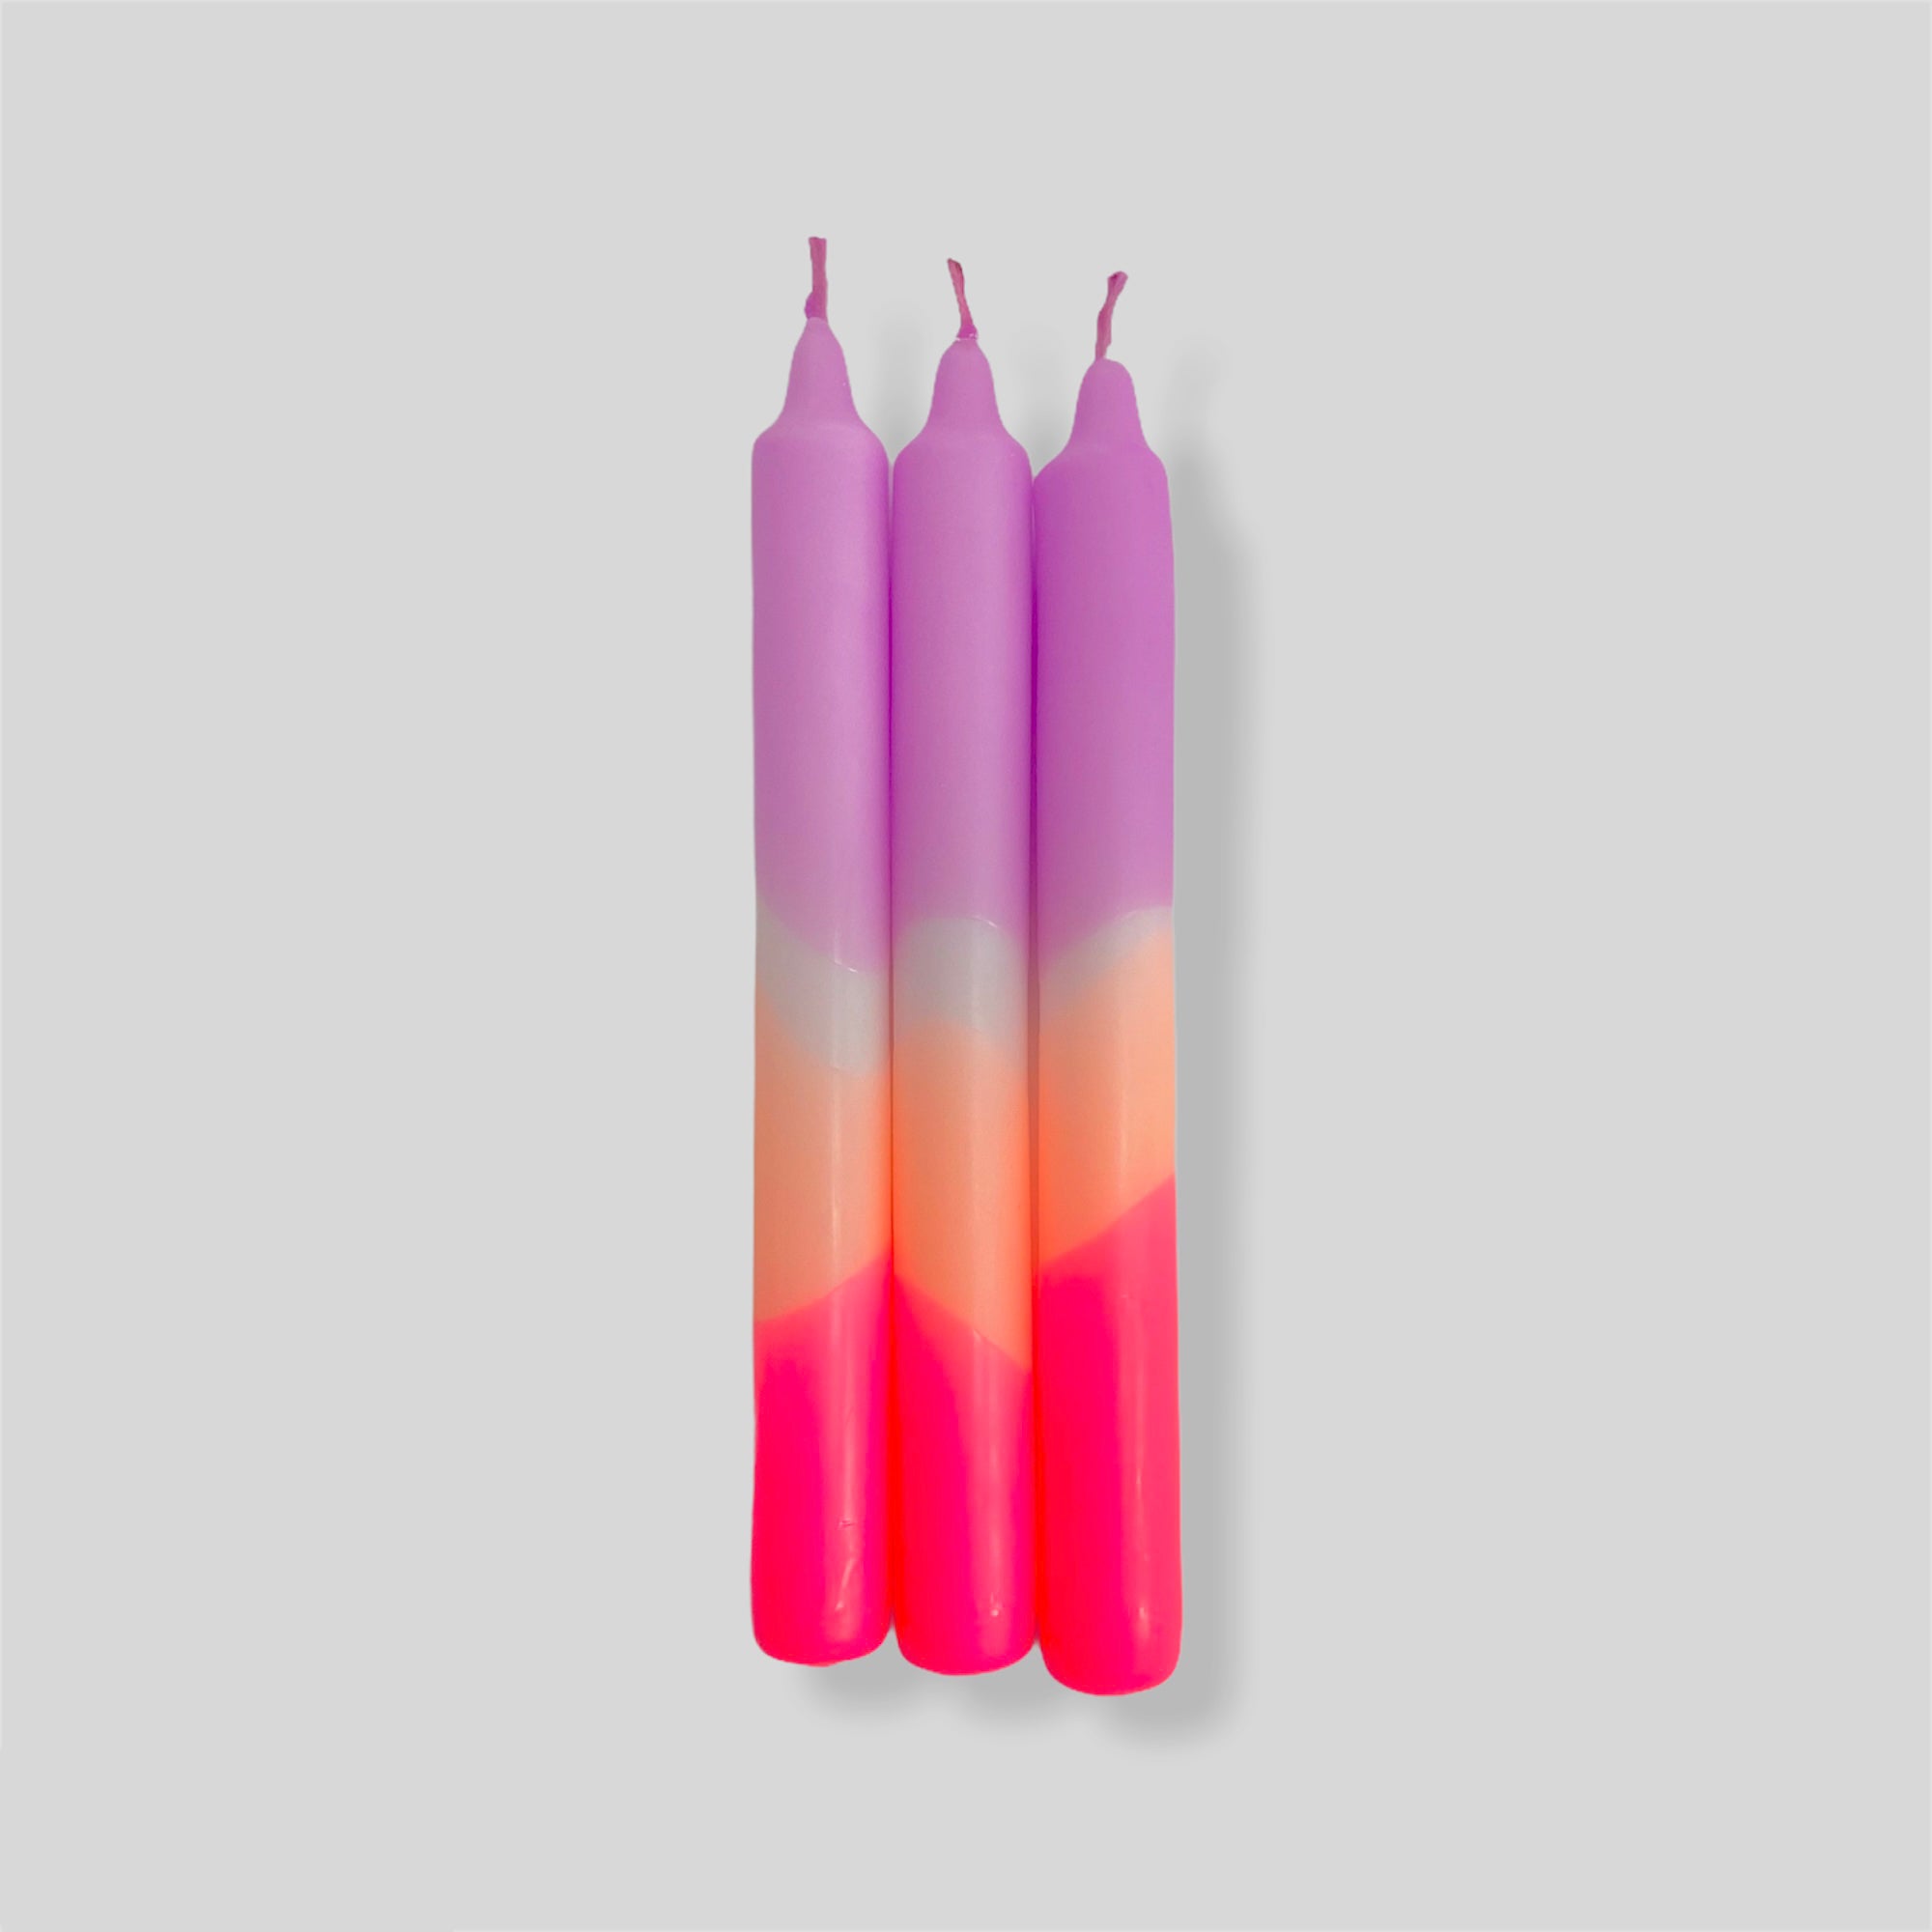 Plum mousse - set of 3 neon dip dye candles